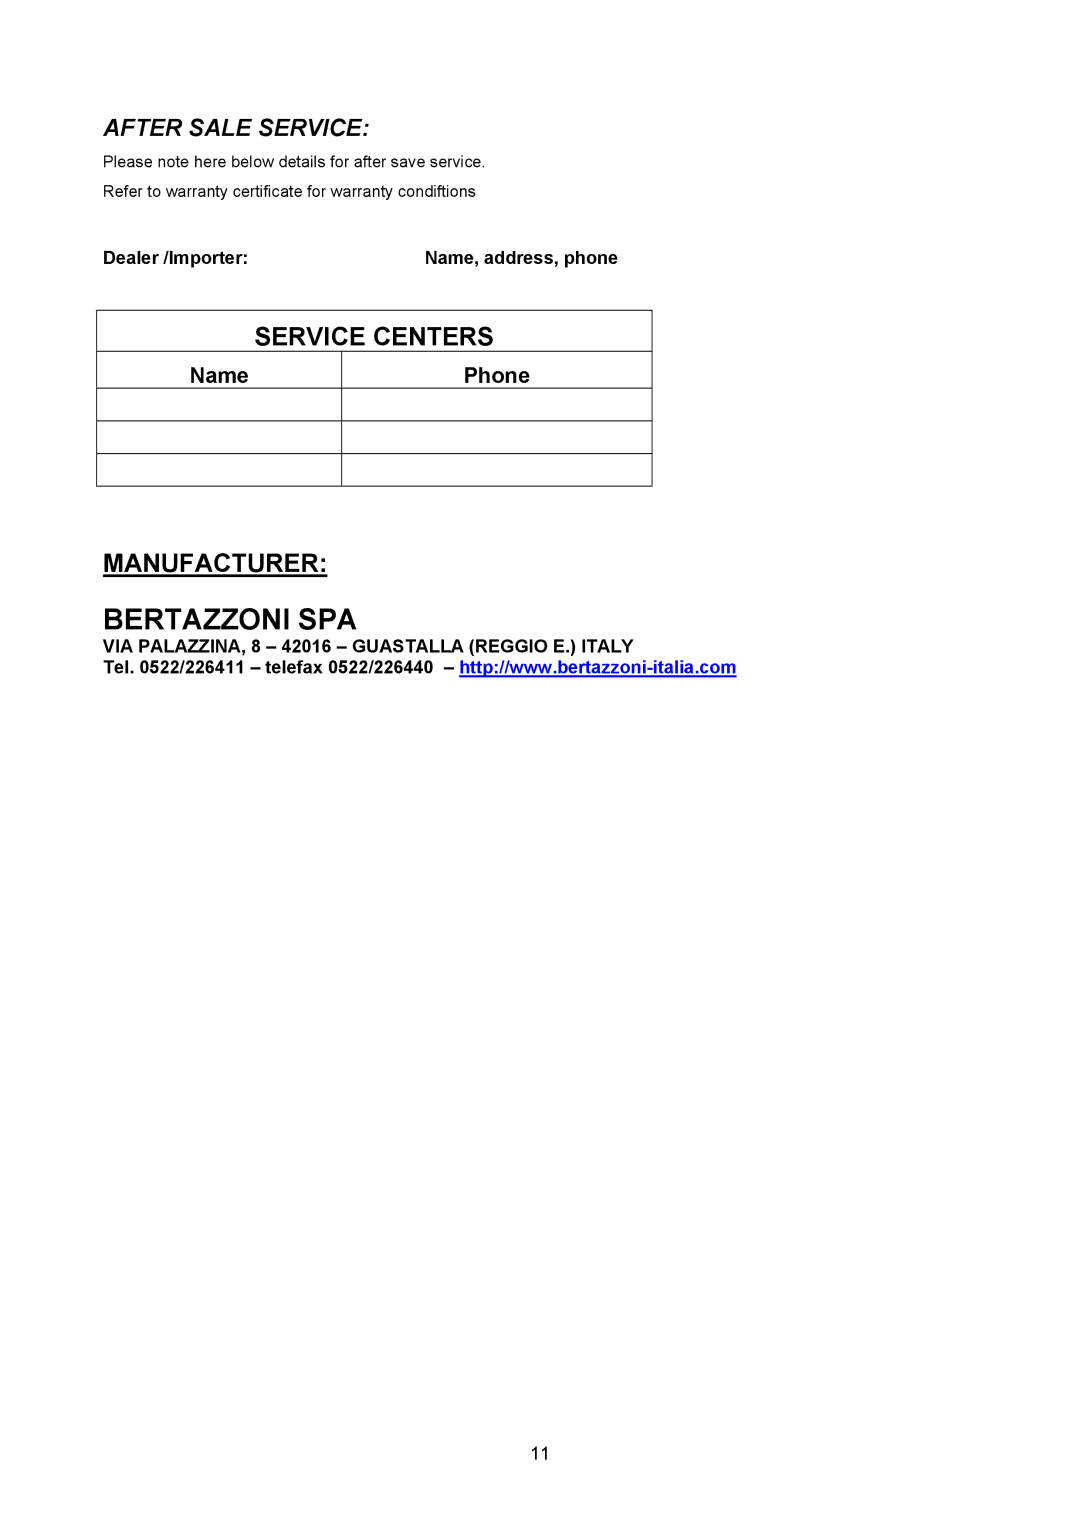 Bertazzoni P24 4 00 X manual Name Phone, Dealer /Importer Name, address, phone 